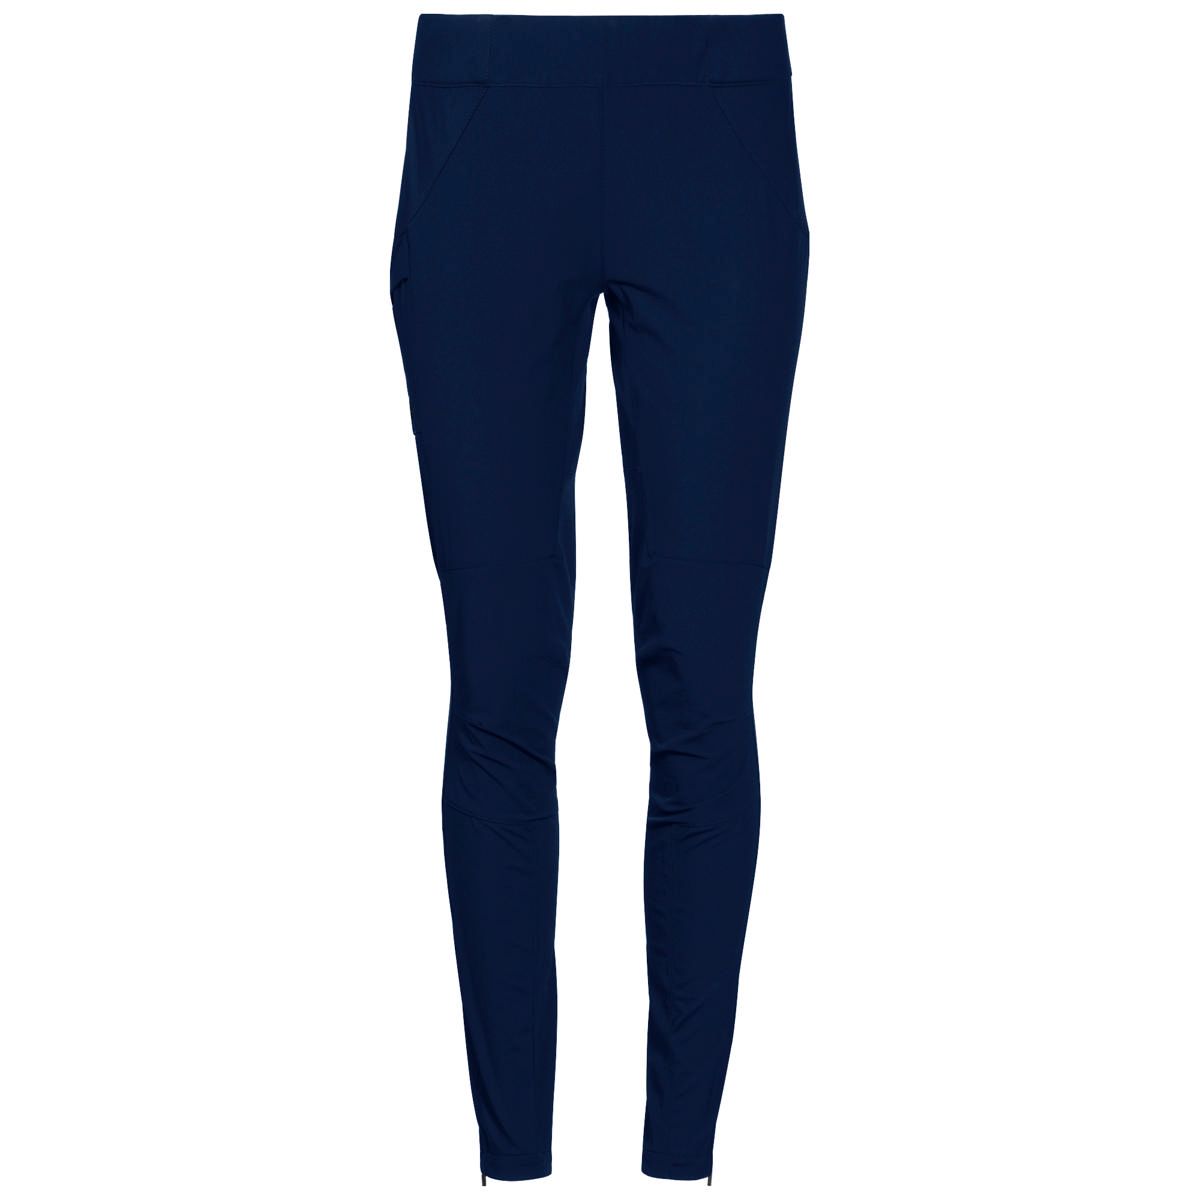 bergans-of-norway-fløyen-original-tight-pants-wo-navy-blue